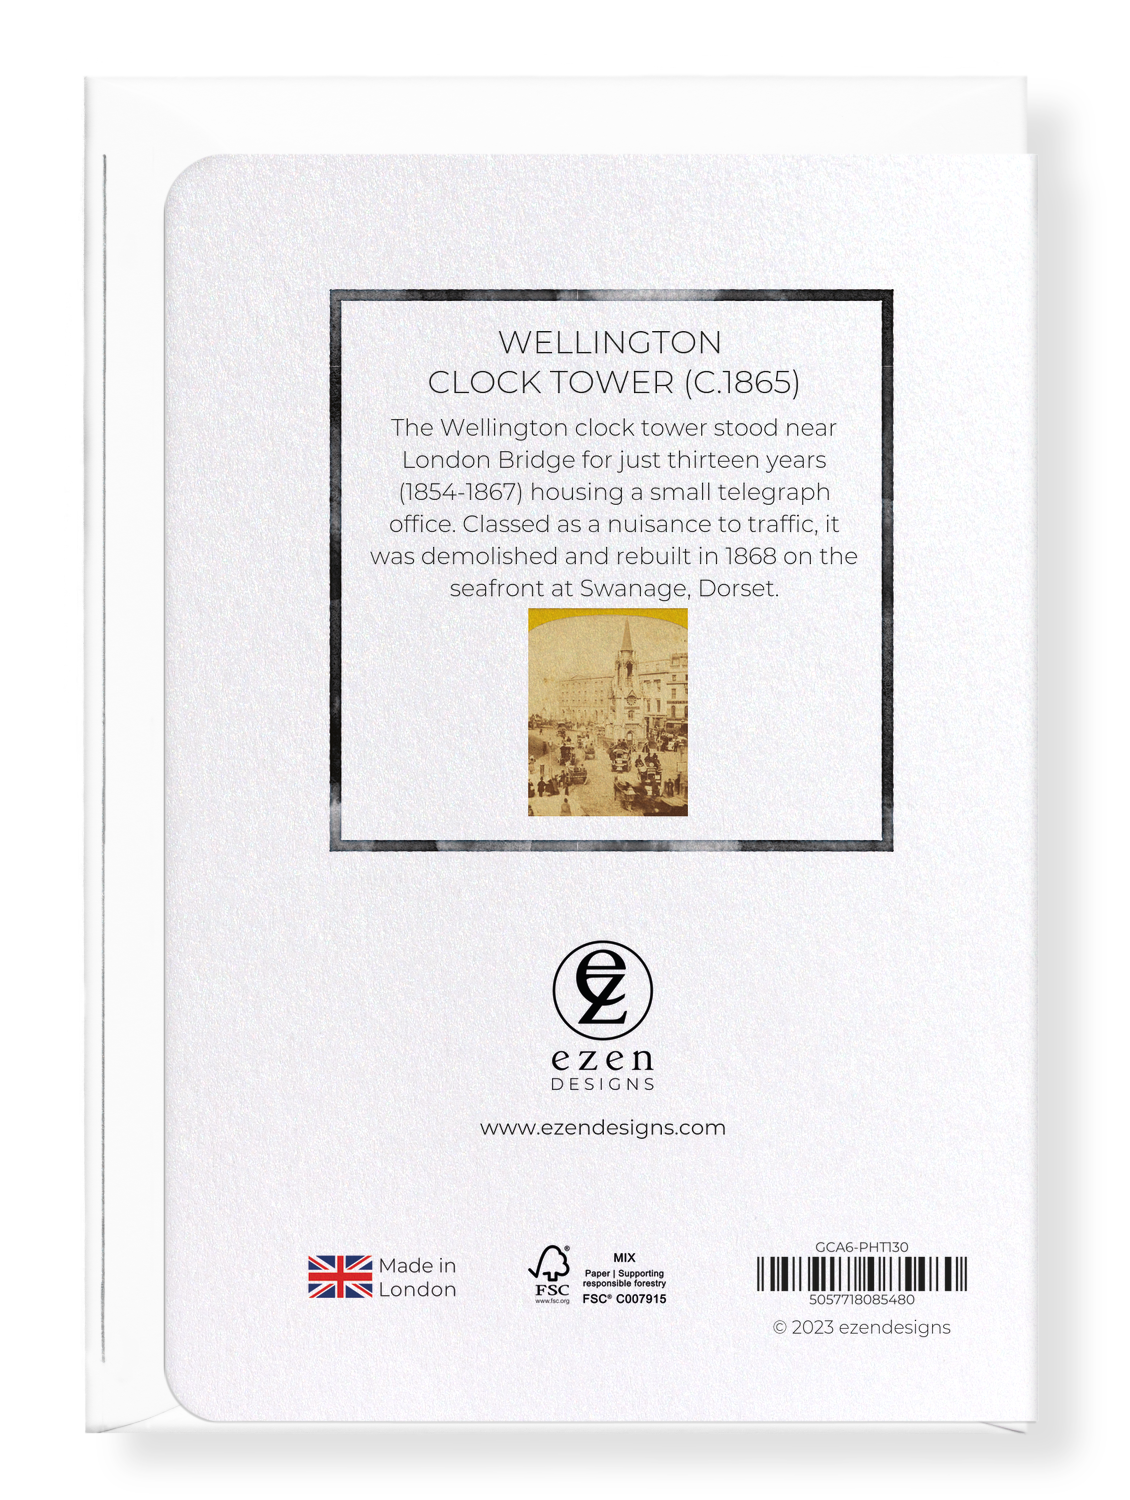 Ezen Designs - Wellington Clock Tower (c.1865) - Greeting Card - Back